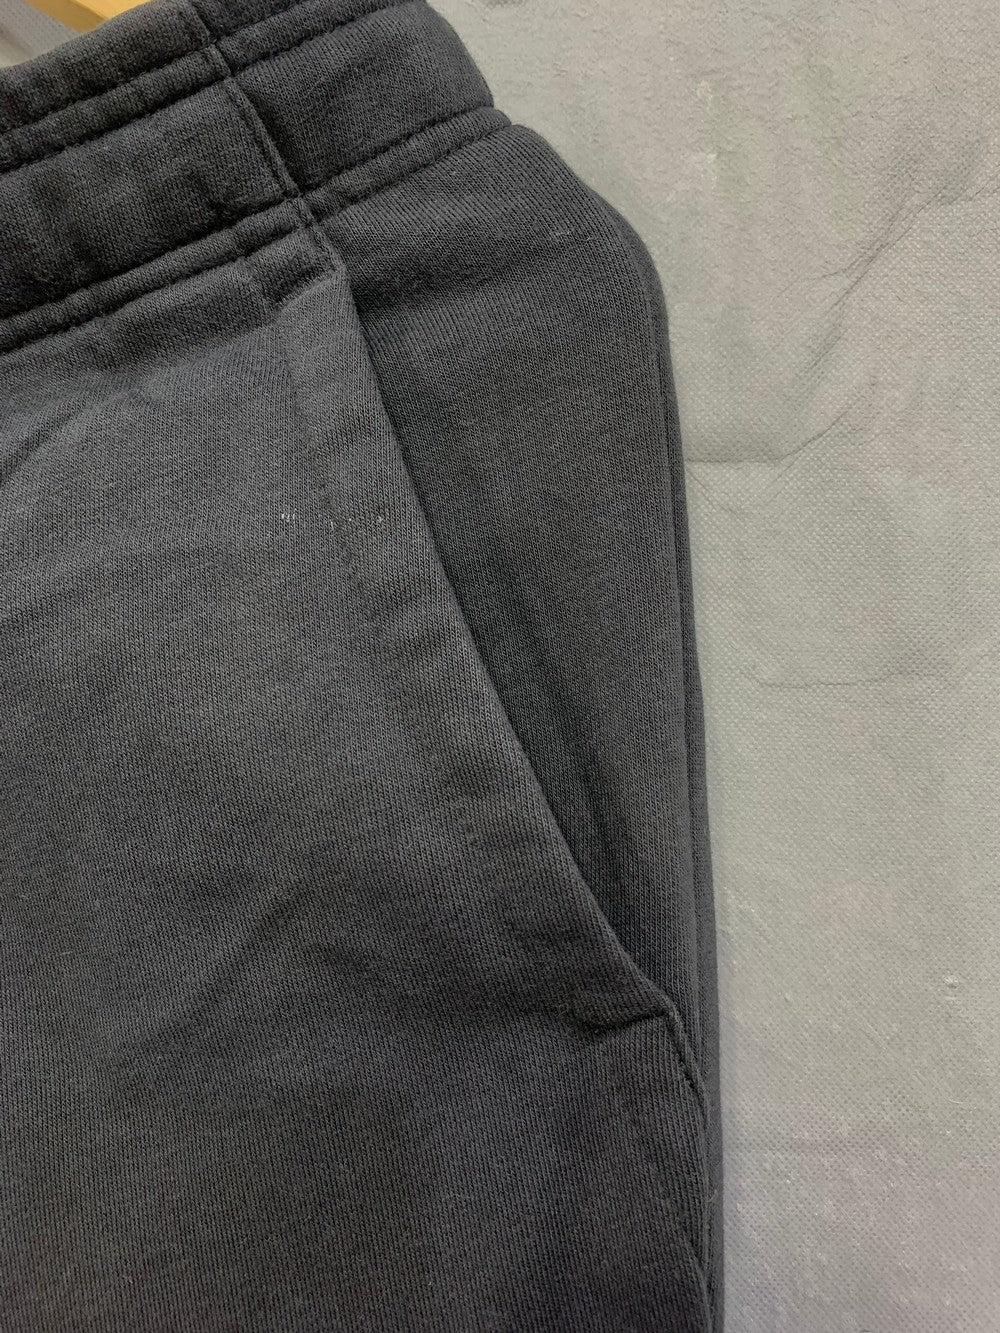 Adidas Branded Original Fleece Winter Trouser For Men